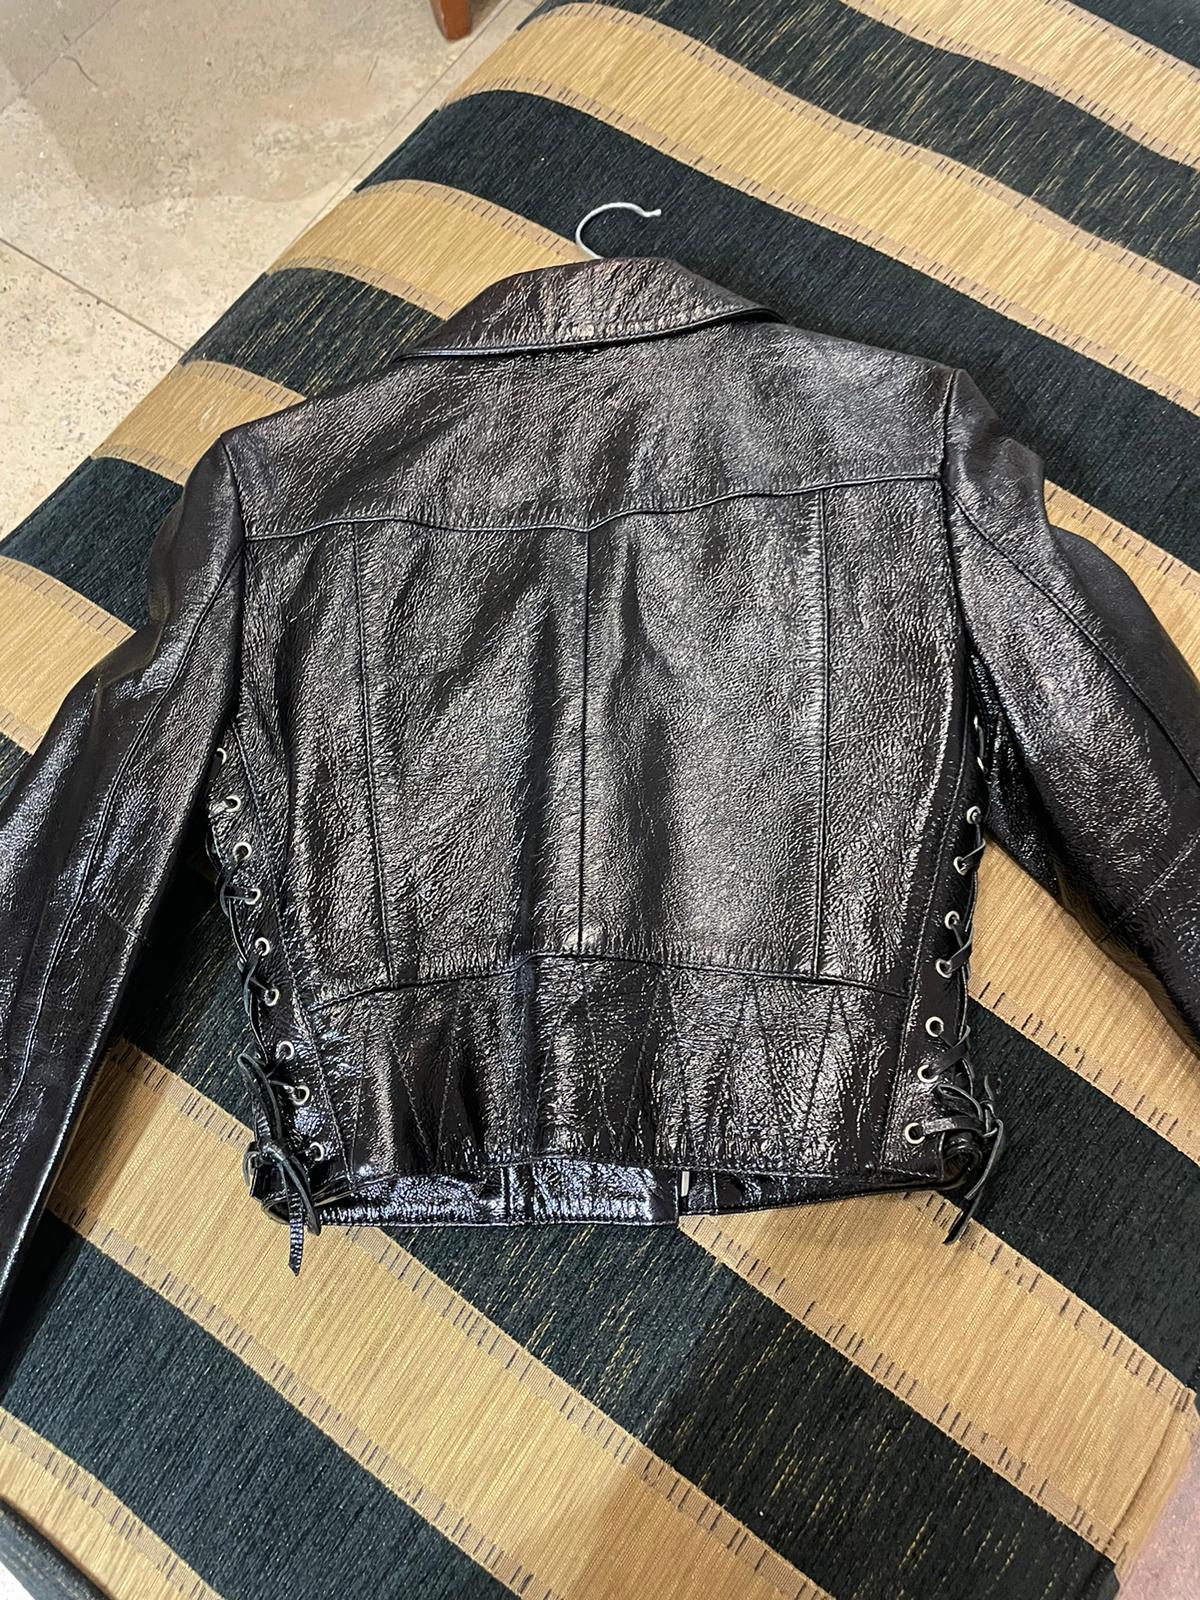 The Kooples black leather biker jacket size 2 RTP £ 695